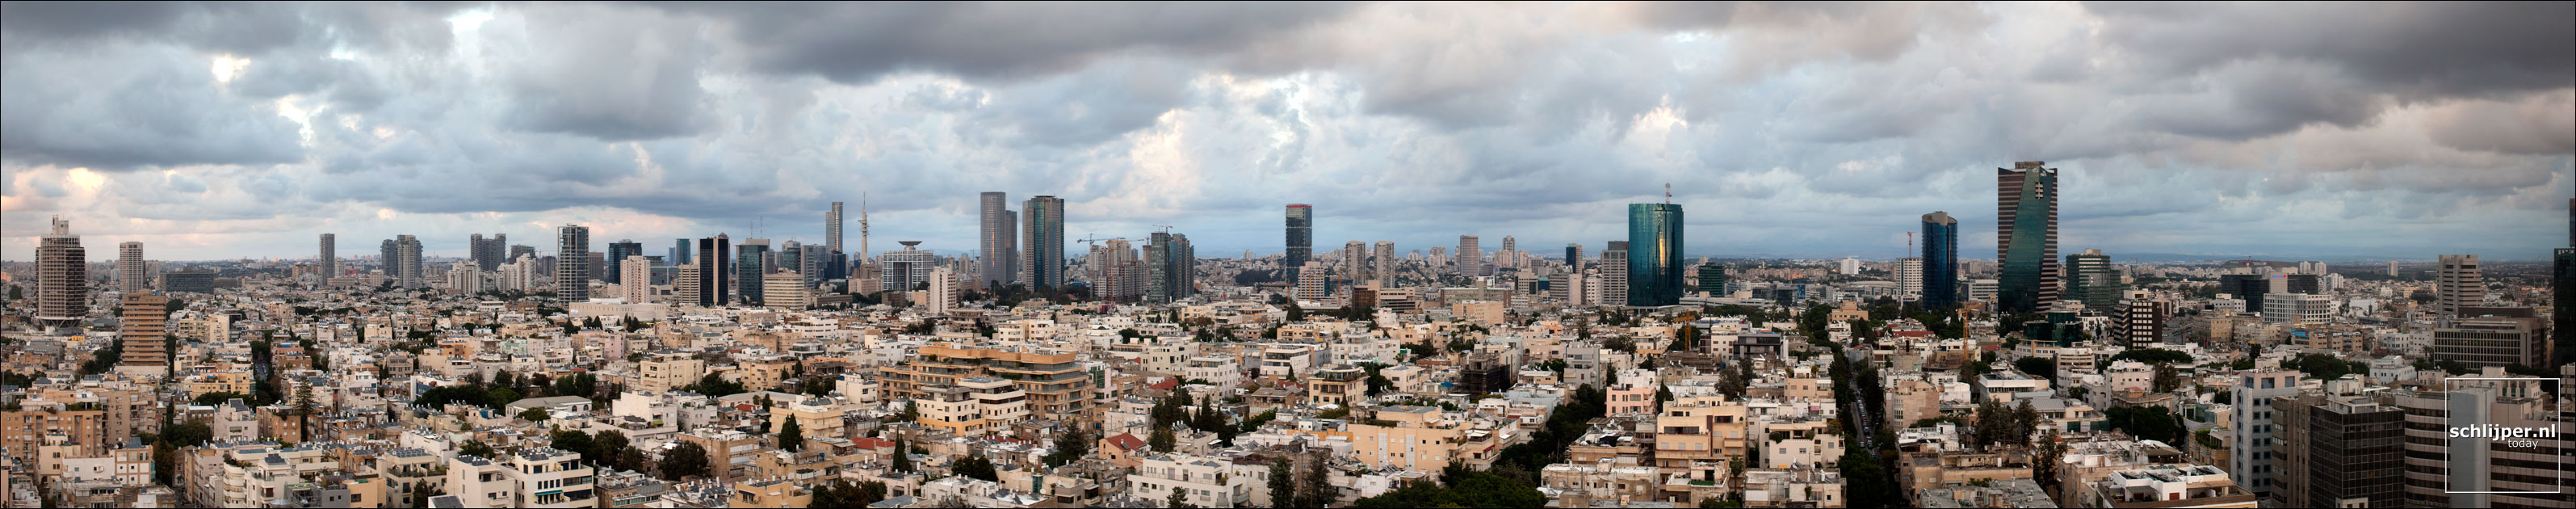 Israel, Tel Aviv, 23 november 2012